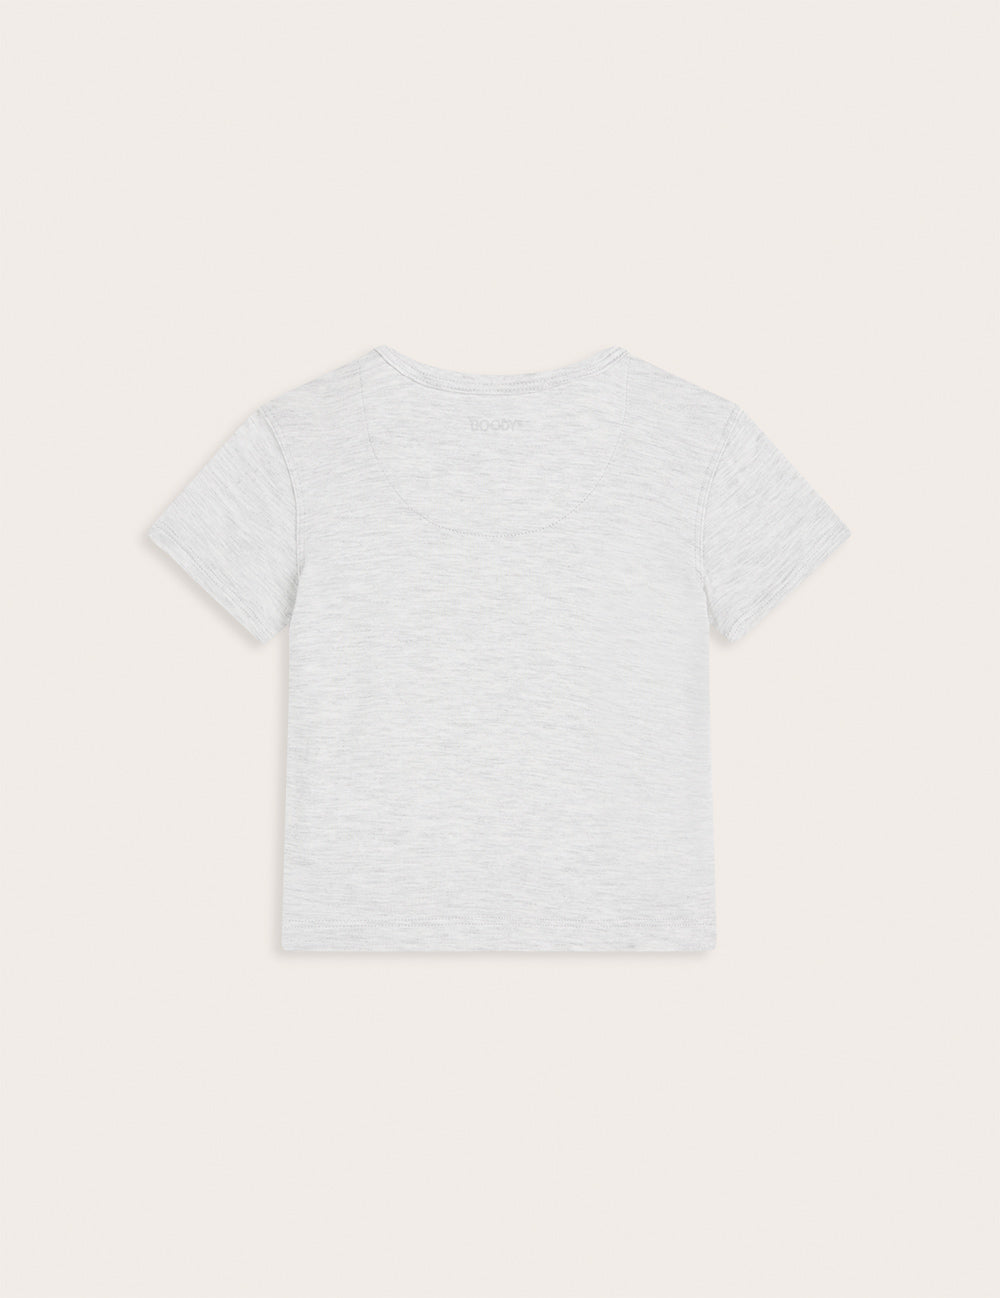 BB1004_HEATHER GREY_Baby Short Sleeve T-Shirt_3.jpg